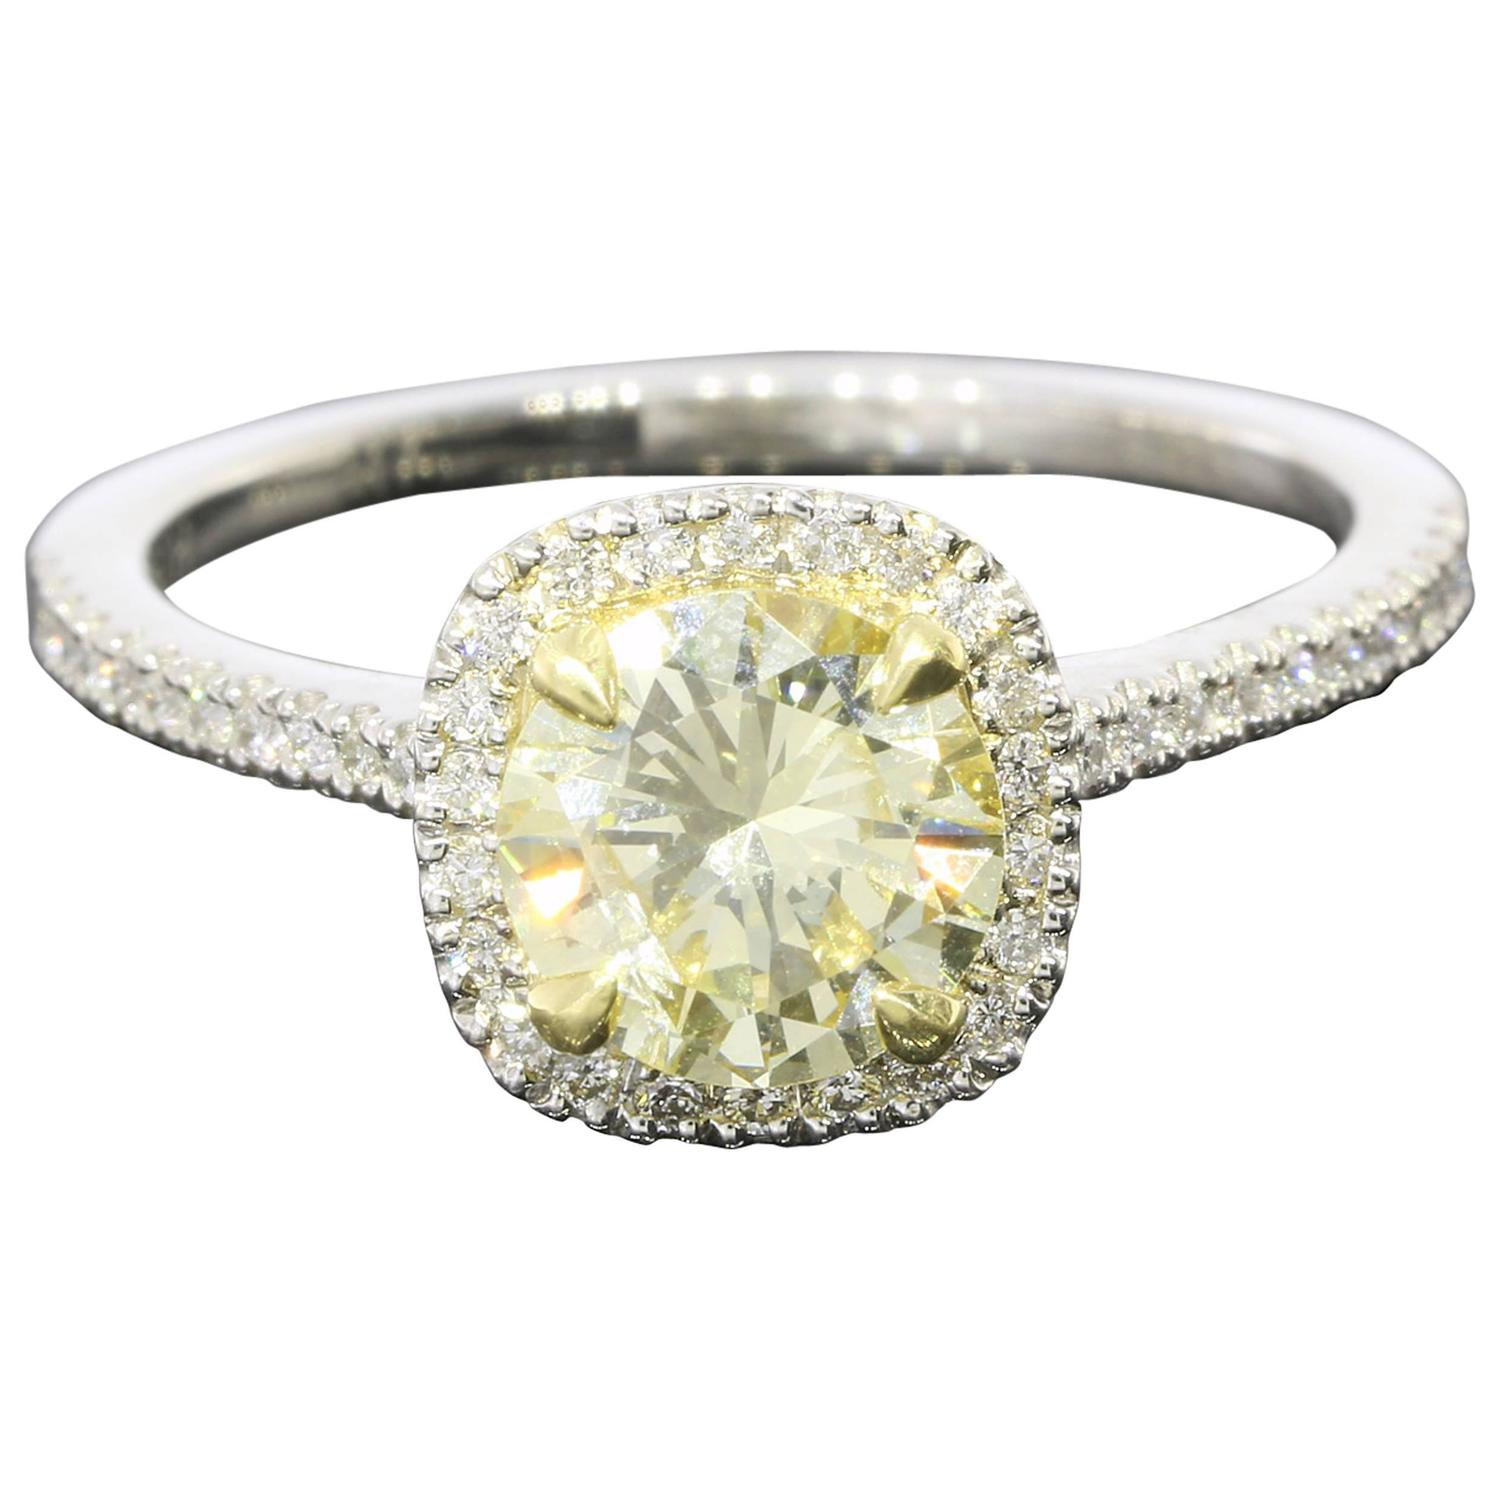 Canary Diamond Engagement Rings
 Fancy Light Yellow Canary Diamond gold platinum Halo Ring